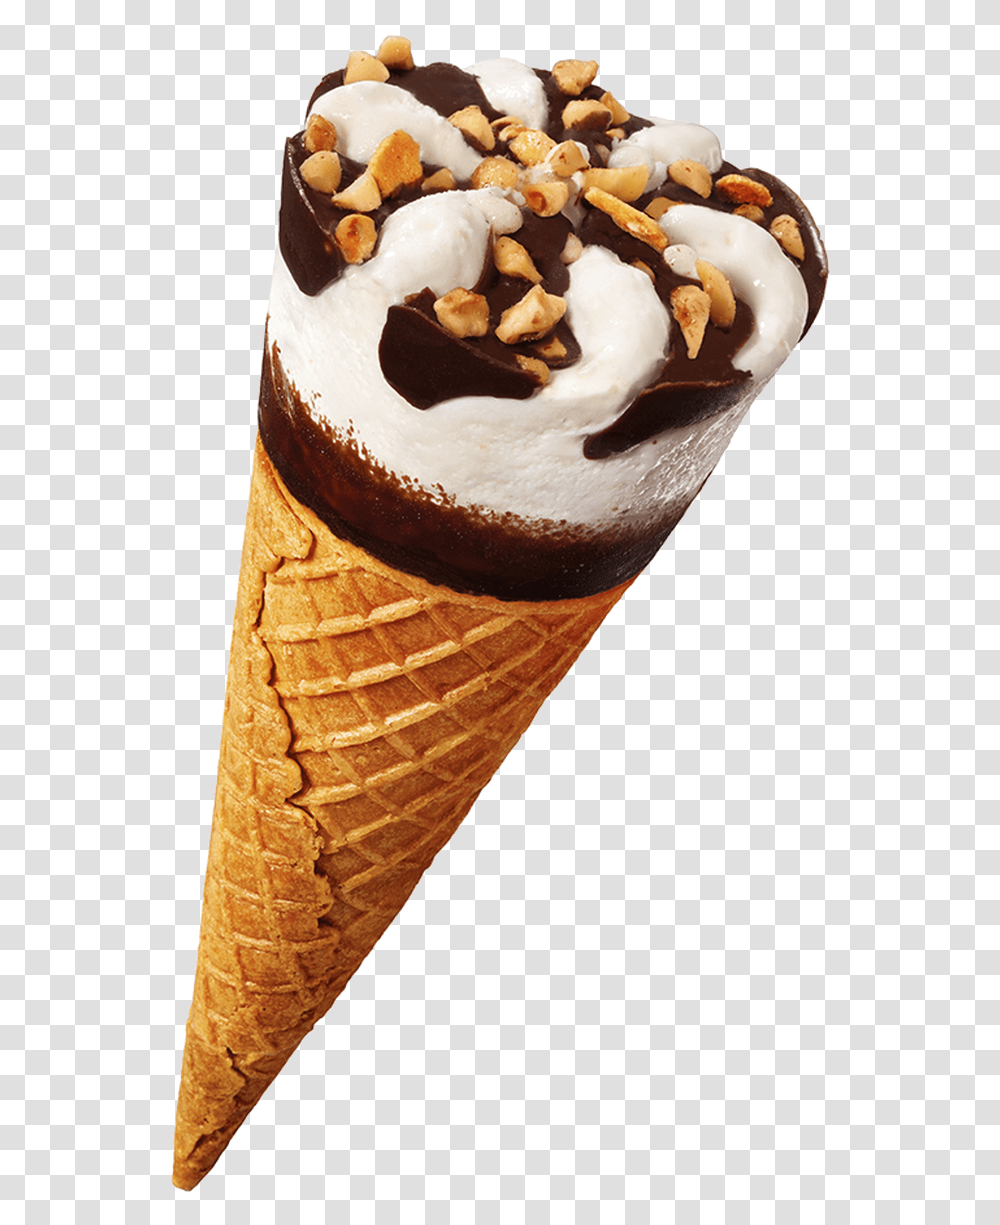 Vanilla Ice Cream Cone Download Vanilla King Cone Ice Cream, Dessert, Food, Creme, Sweets Transparent Png